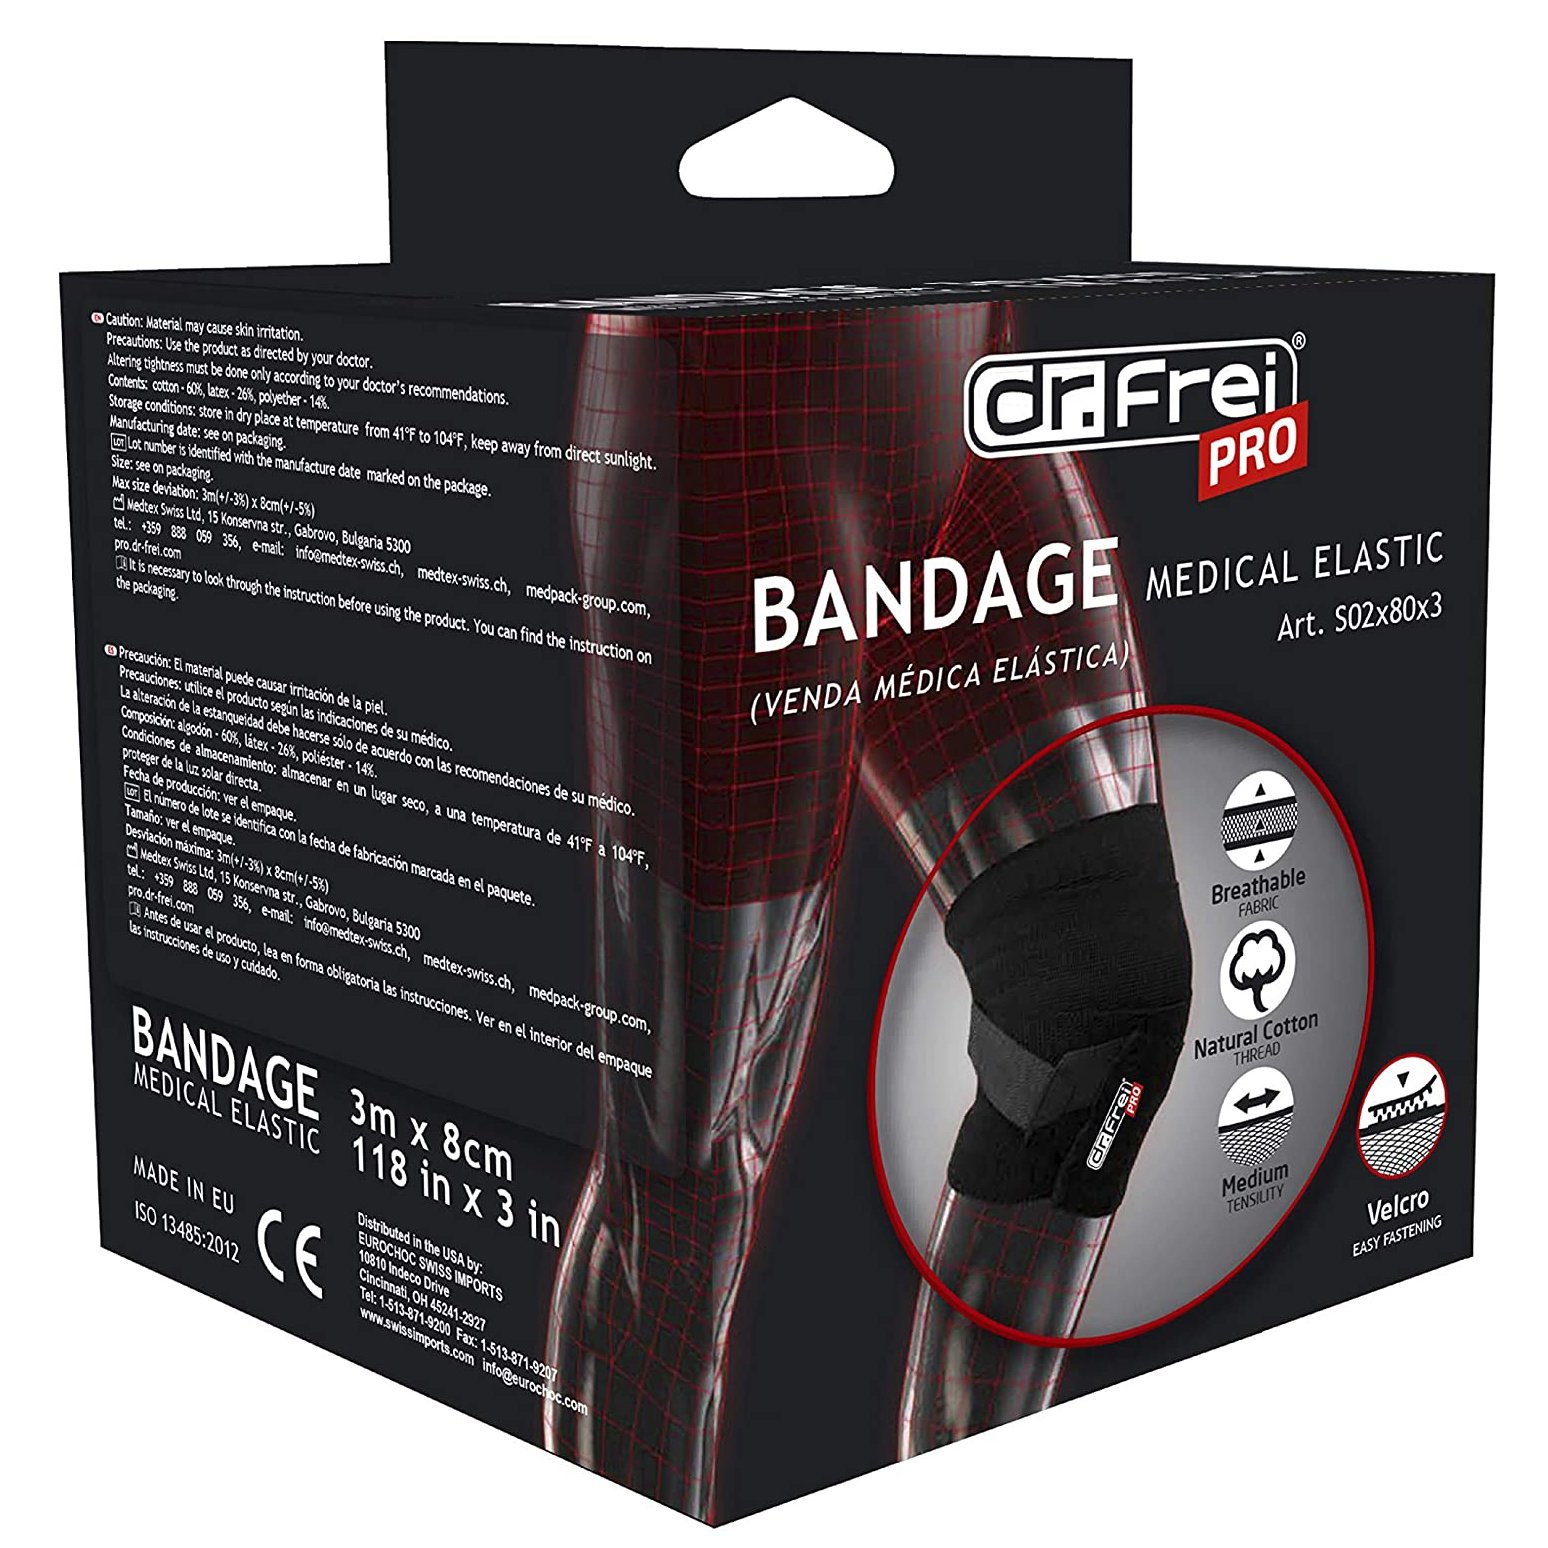 Dr.Frei Dr. Frei Bandage Medical Elastic Ελαστικός Επίδεσμος με Σύστημα Velcro Μαύρο 1 Τεμάχιο - 3m x 8cm